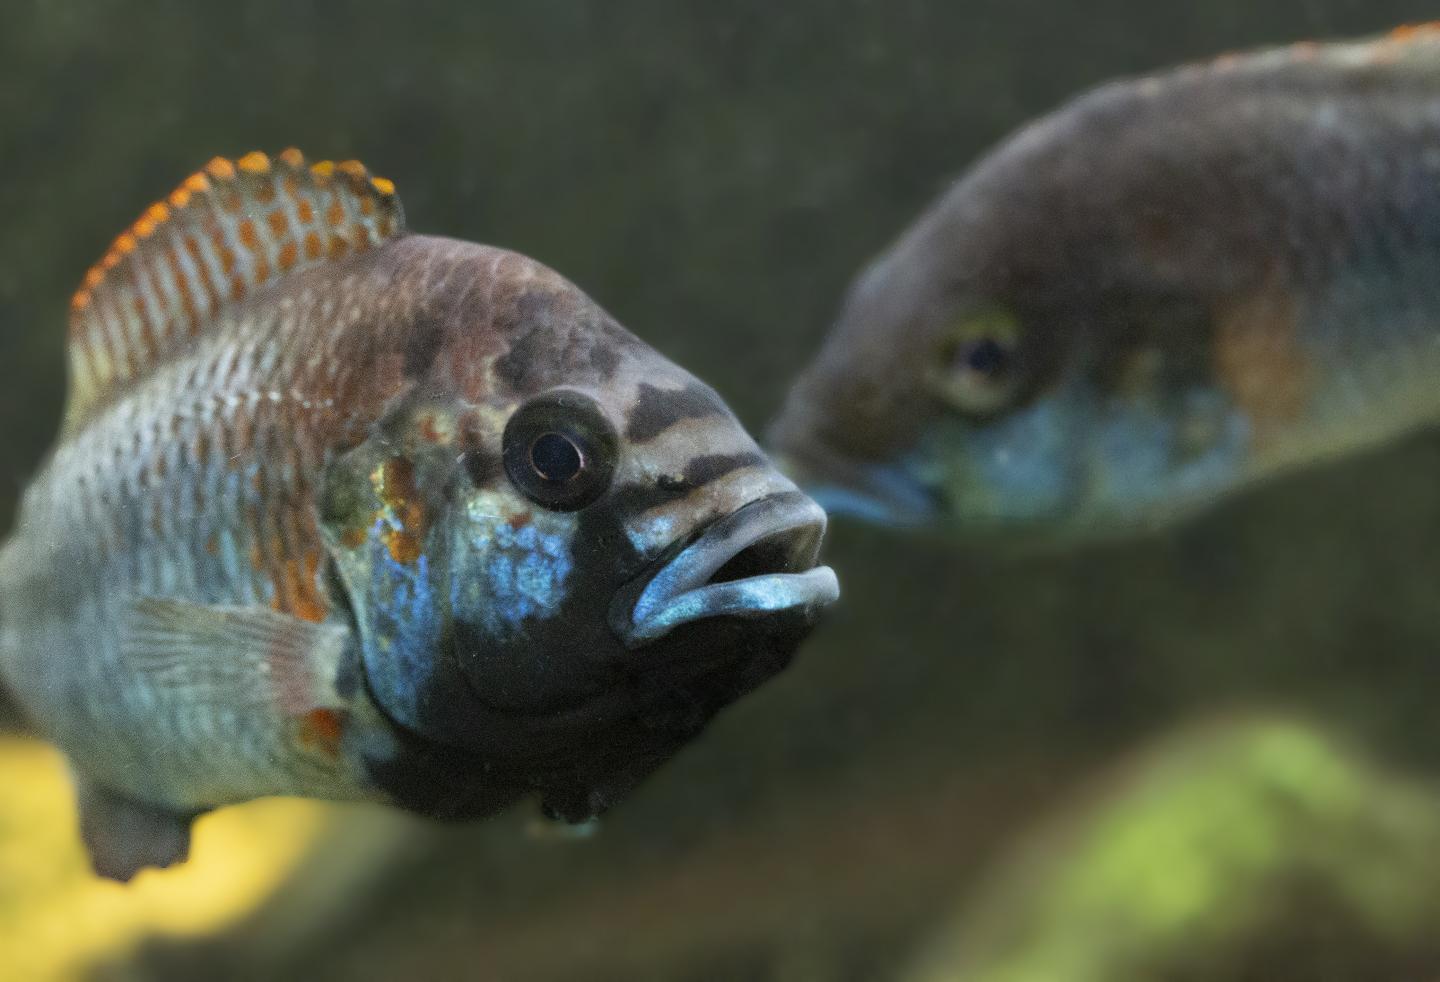 Two males of the cichlid fish Astatotilapia burtoni